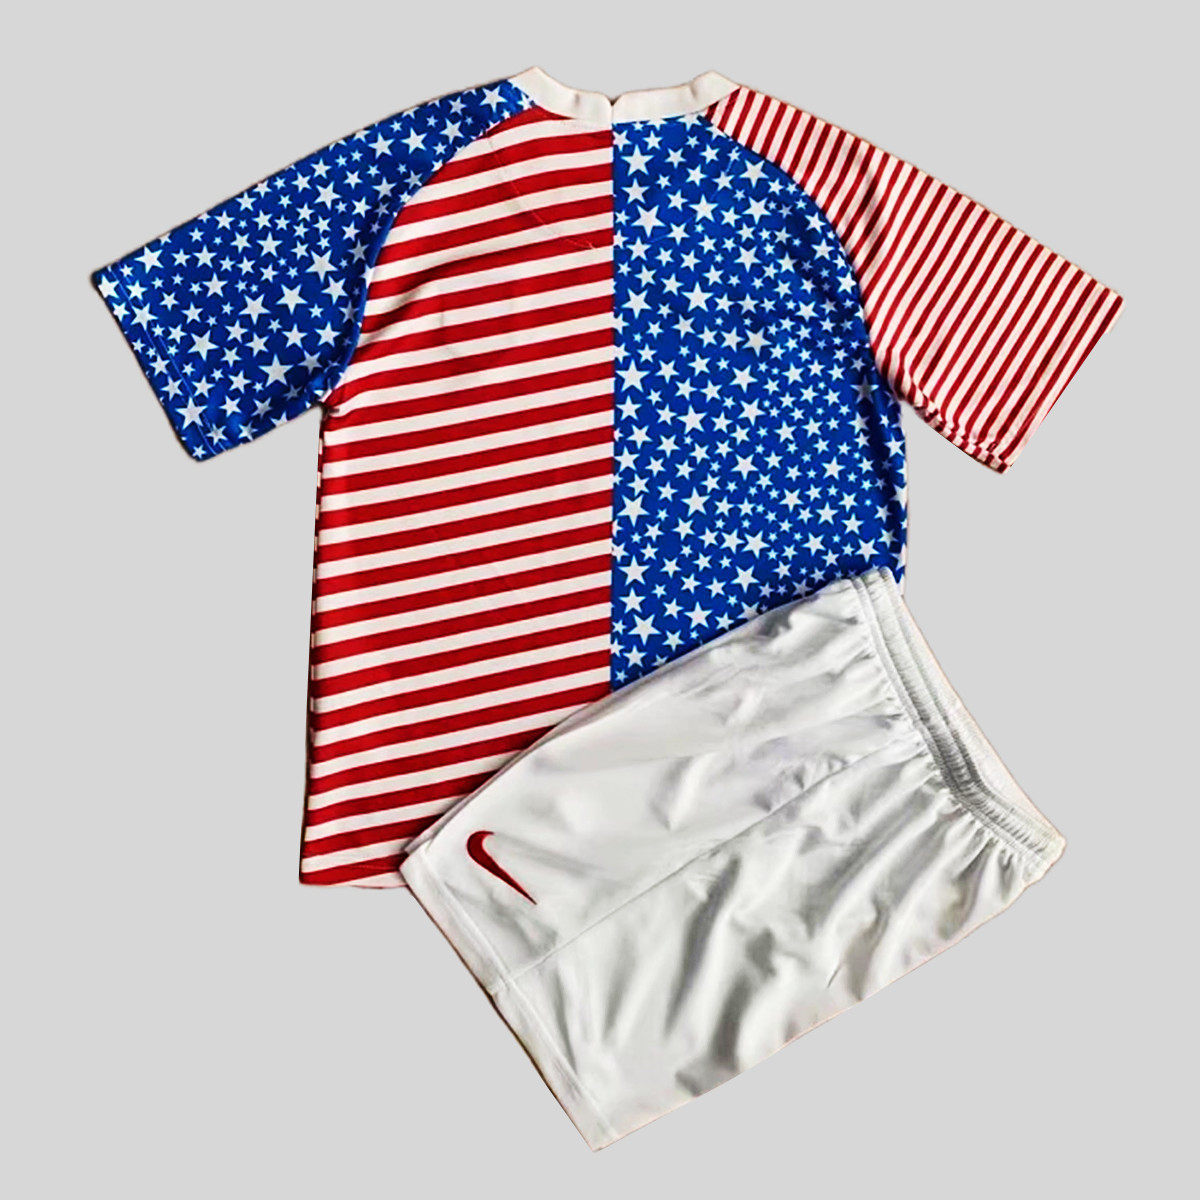 USA 2022 Concept Jersey and Short Kit - Soccer Jerseys, Shirts & Shorts ...